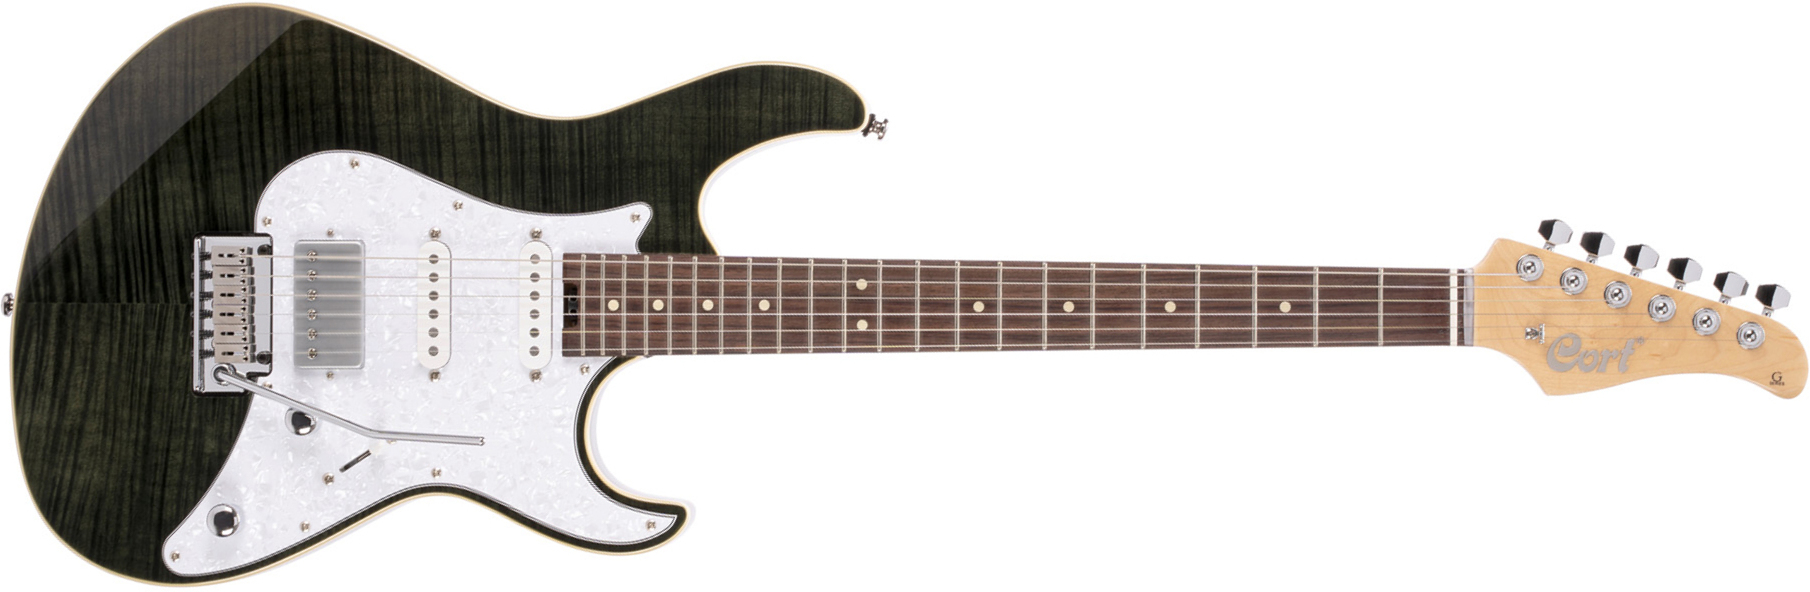 Cort G280 Setbk Hss Trem Rw - Trans Black - Str shape electric guitar - Main picture